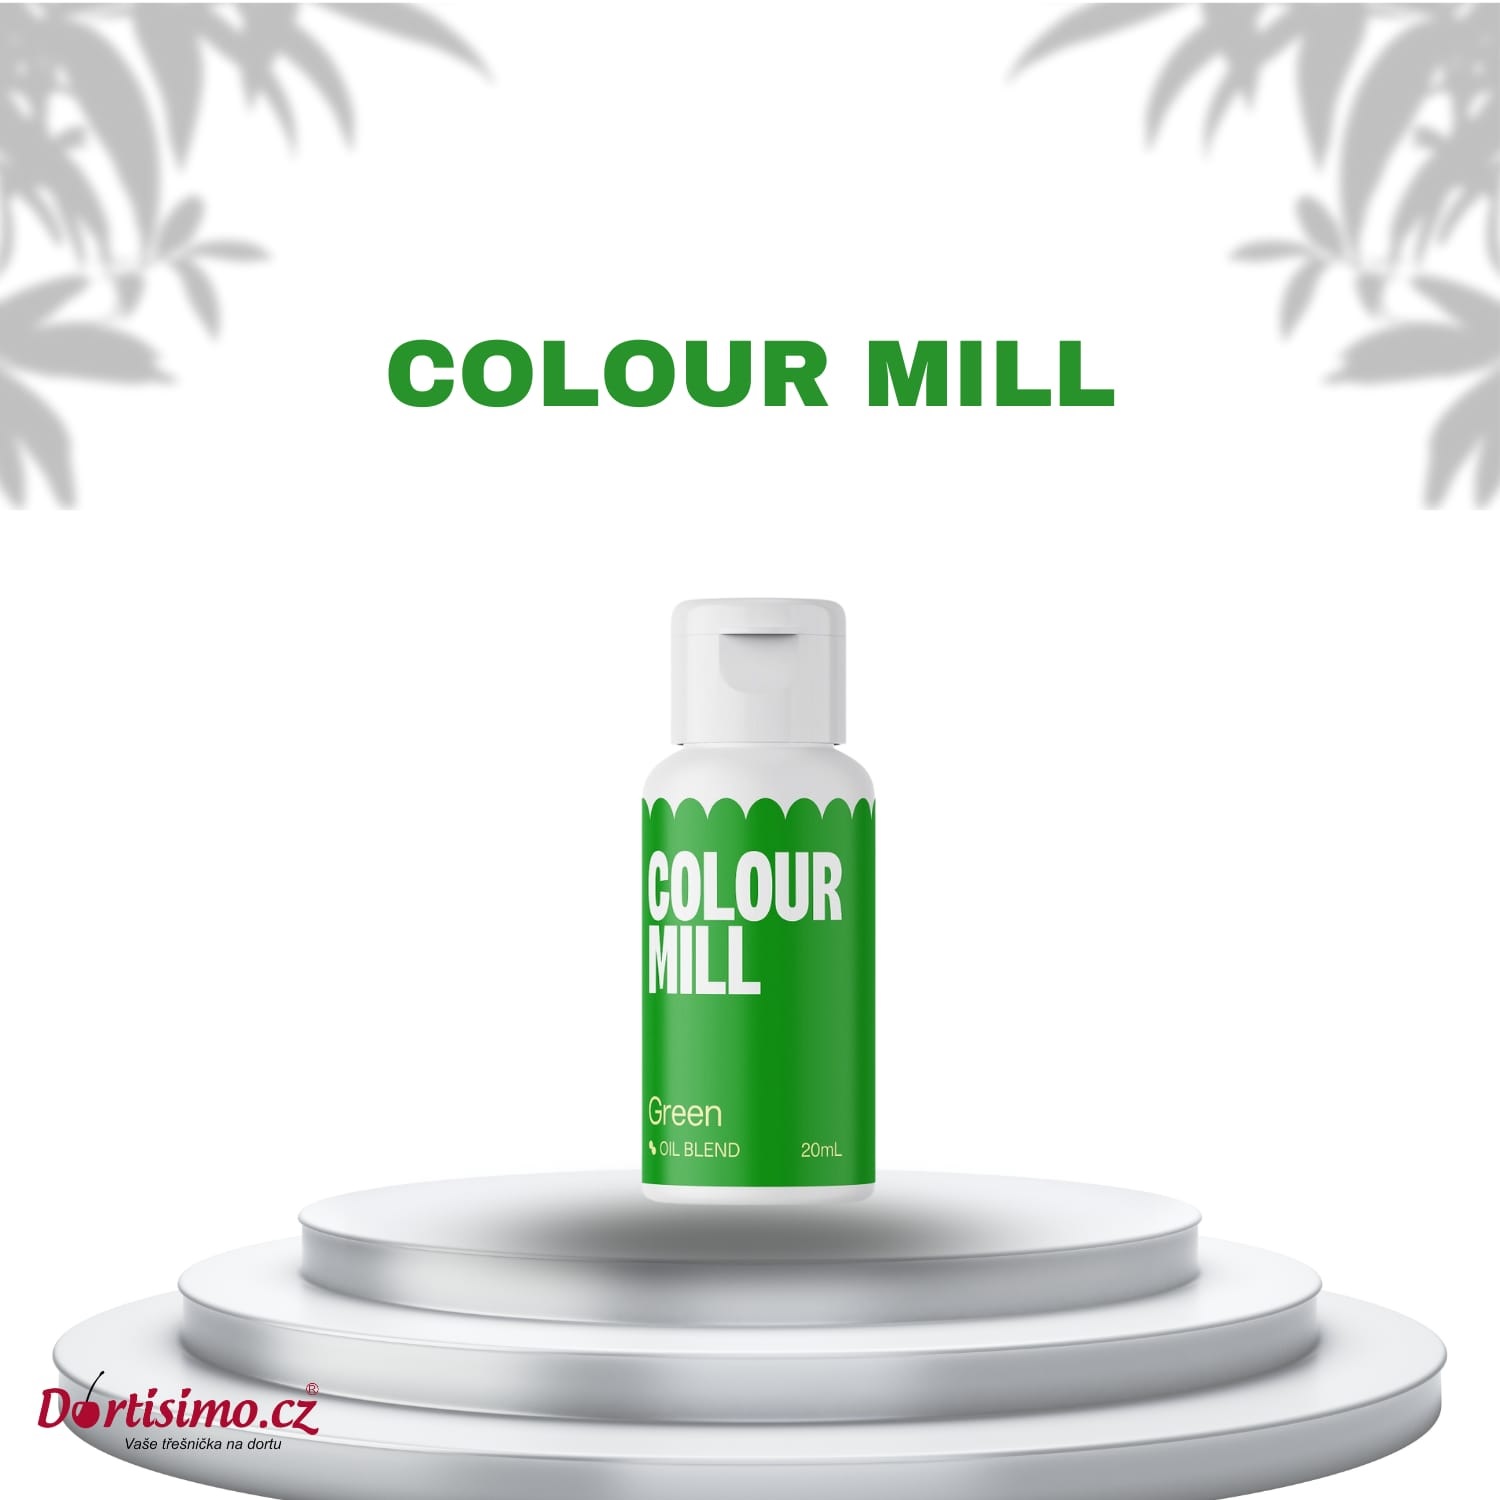 Obrázek k výrobku 23698 - Colour Mill olejová farba Green (20ml)